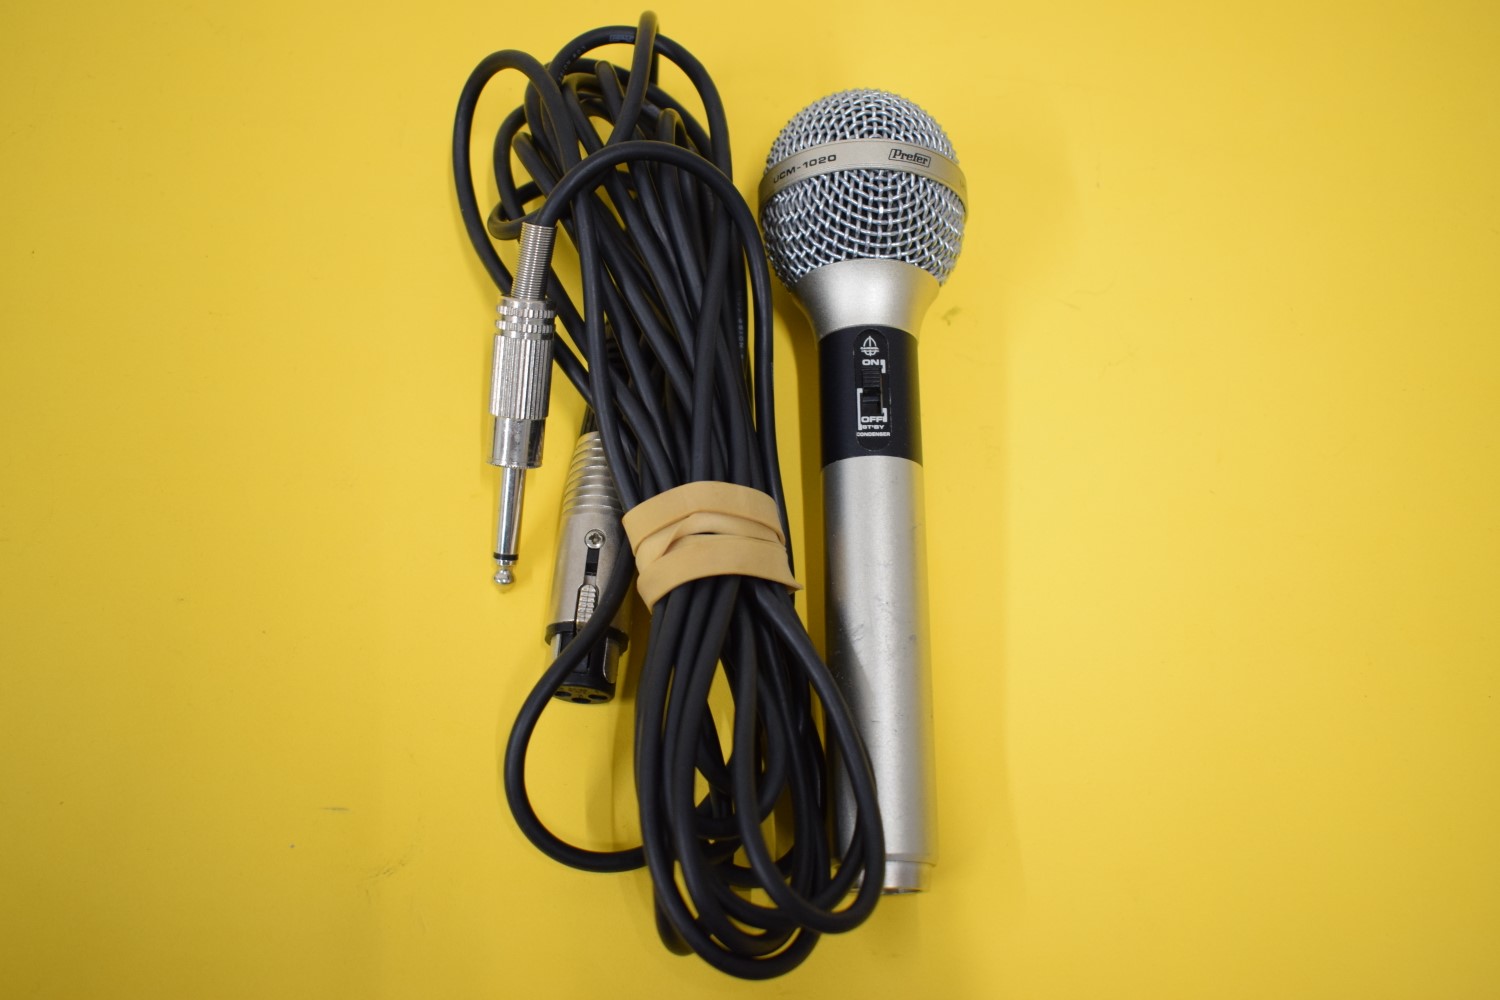 Prefer UCM-1020 Mikrofon – In Originale Verpackung